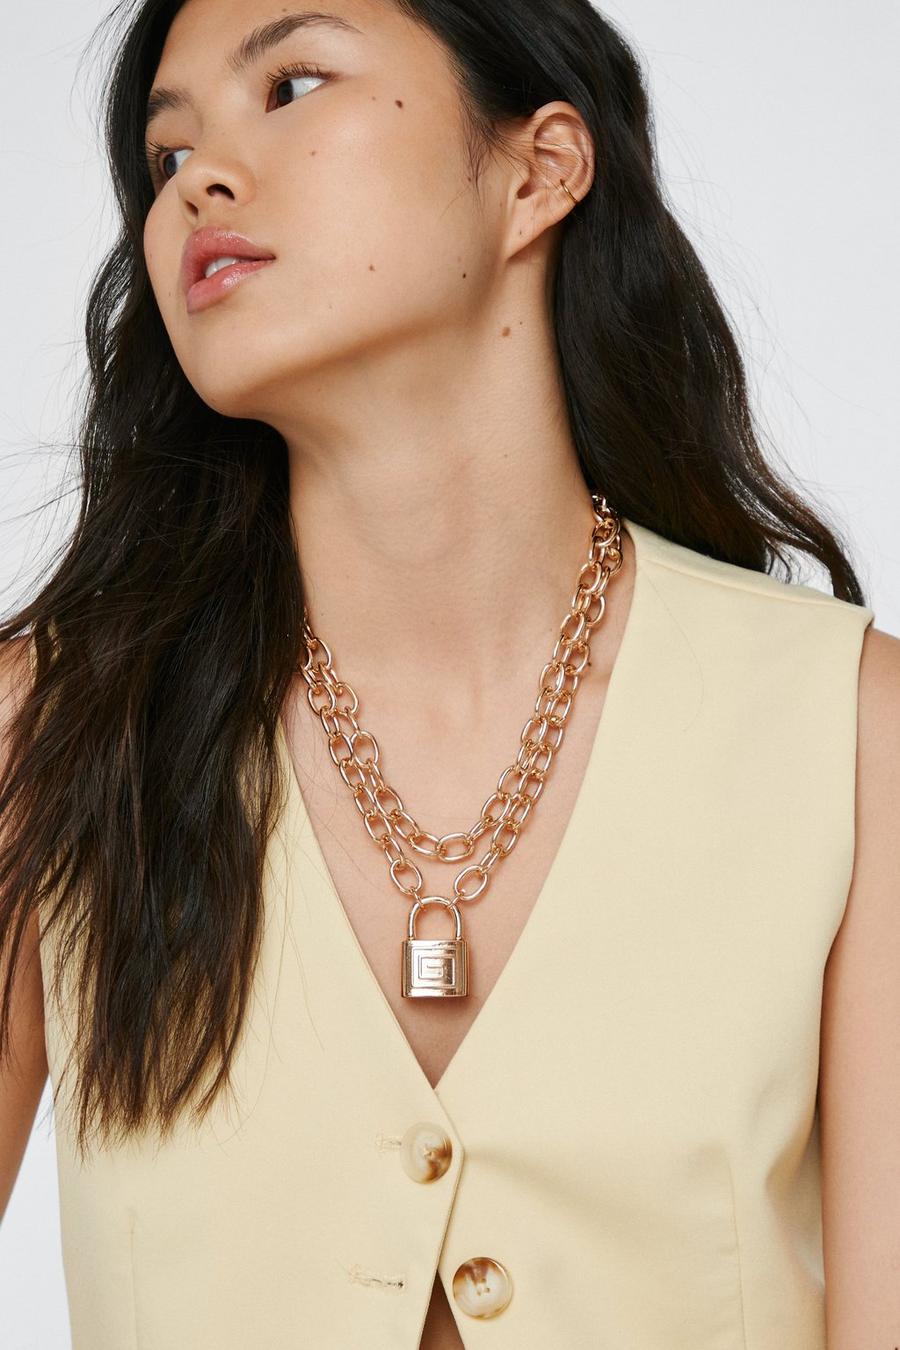 Women 3 Layered Necklace silverBeaded Horn Choker Chain Pendant Jewelry Gifts UK 